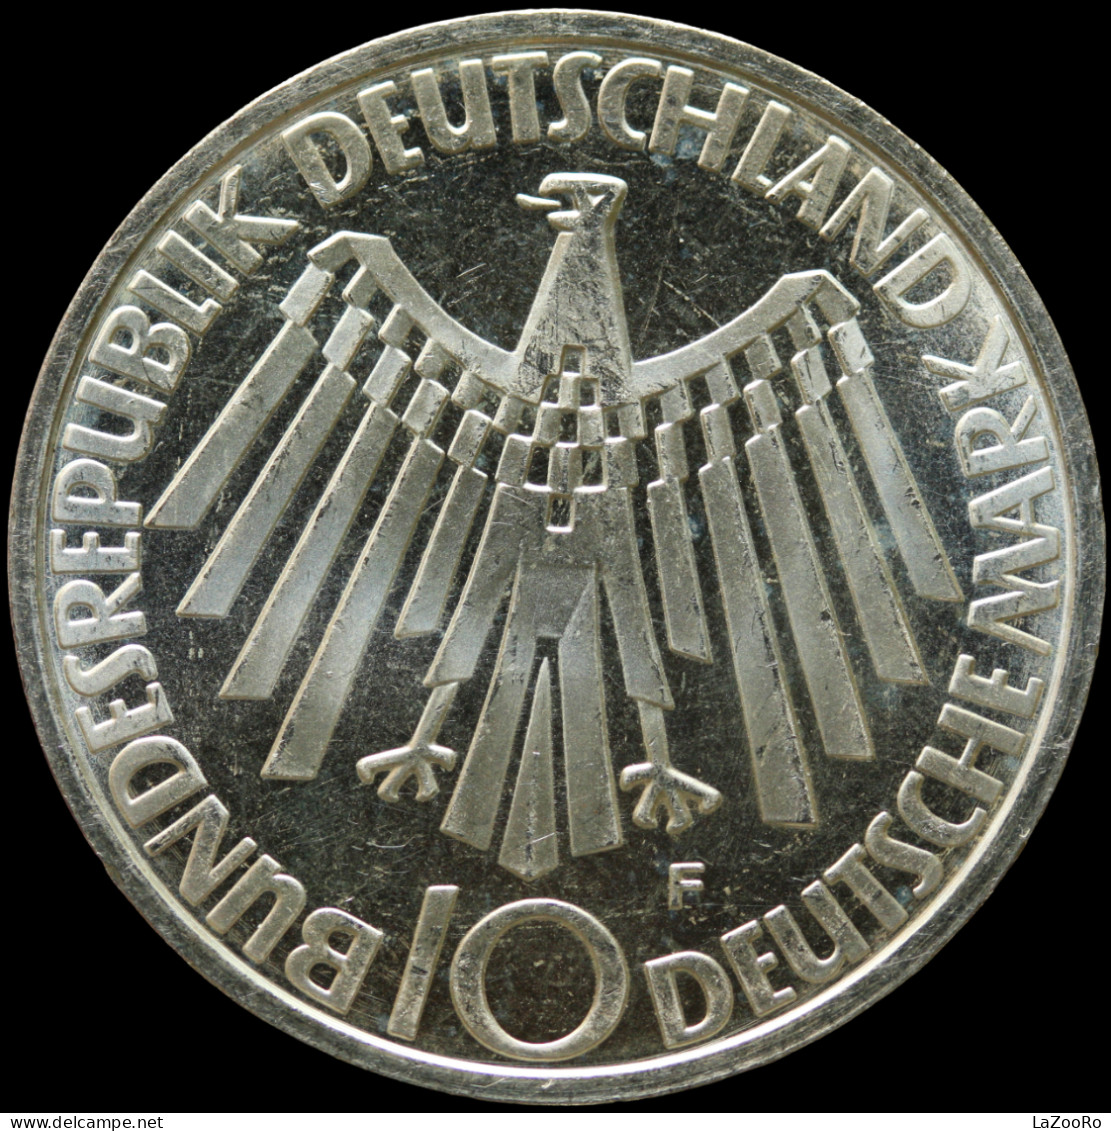 LaZooRo: Germany 10 Mark 1972 F PROOF Olympics - Silver - Herdenkingsmunt